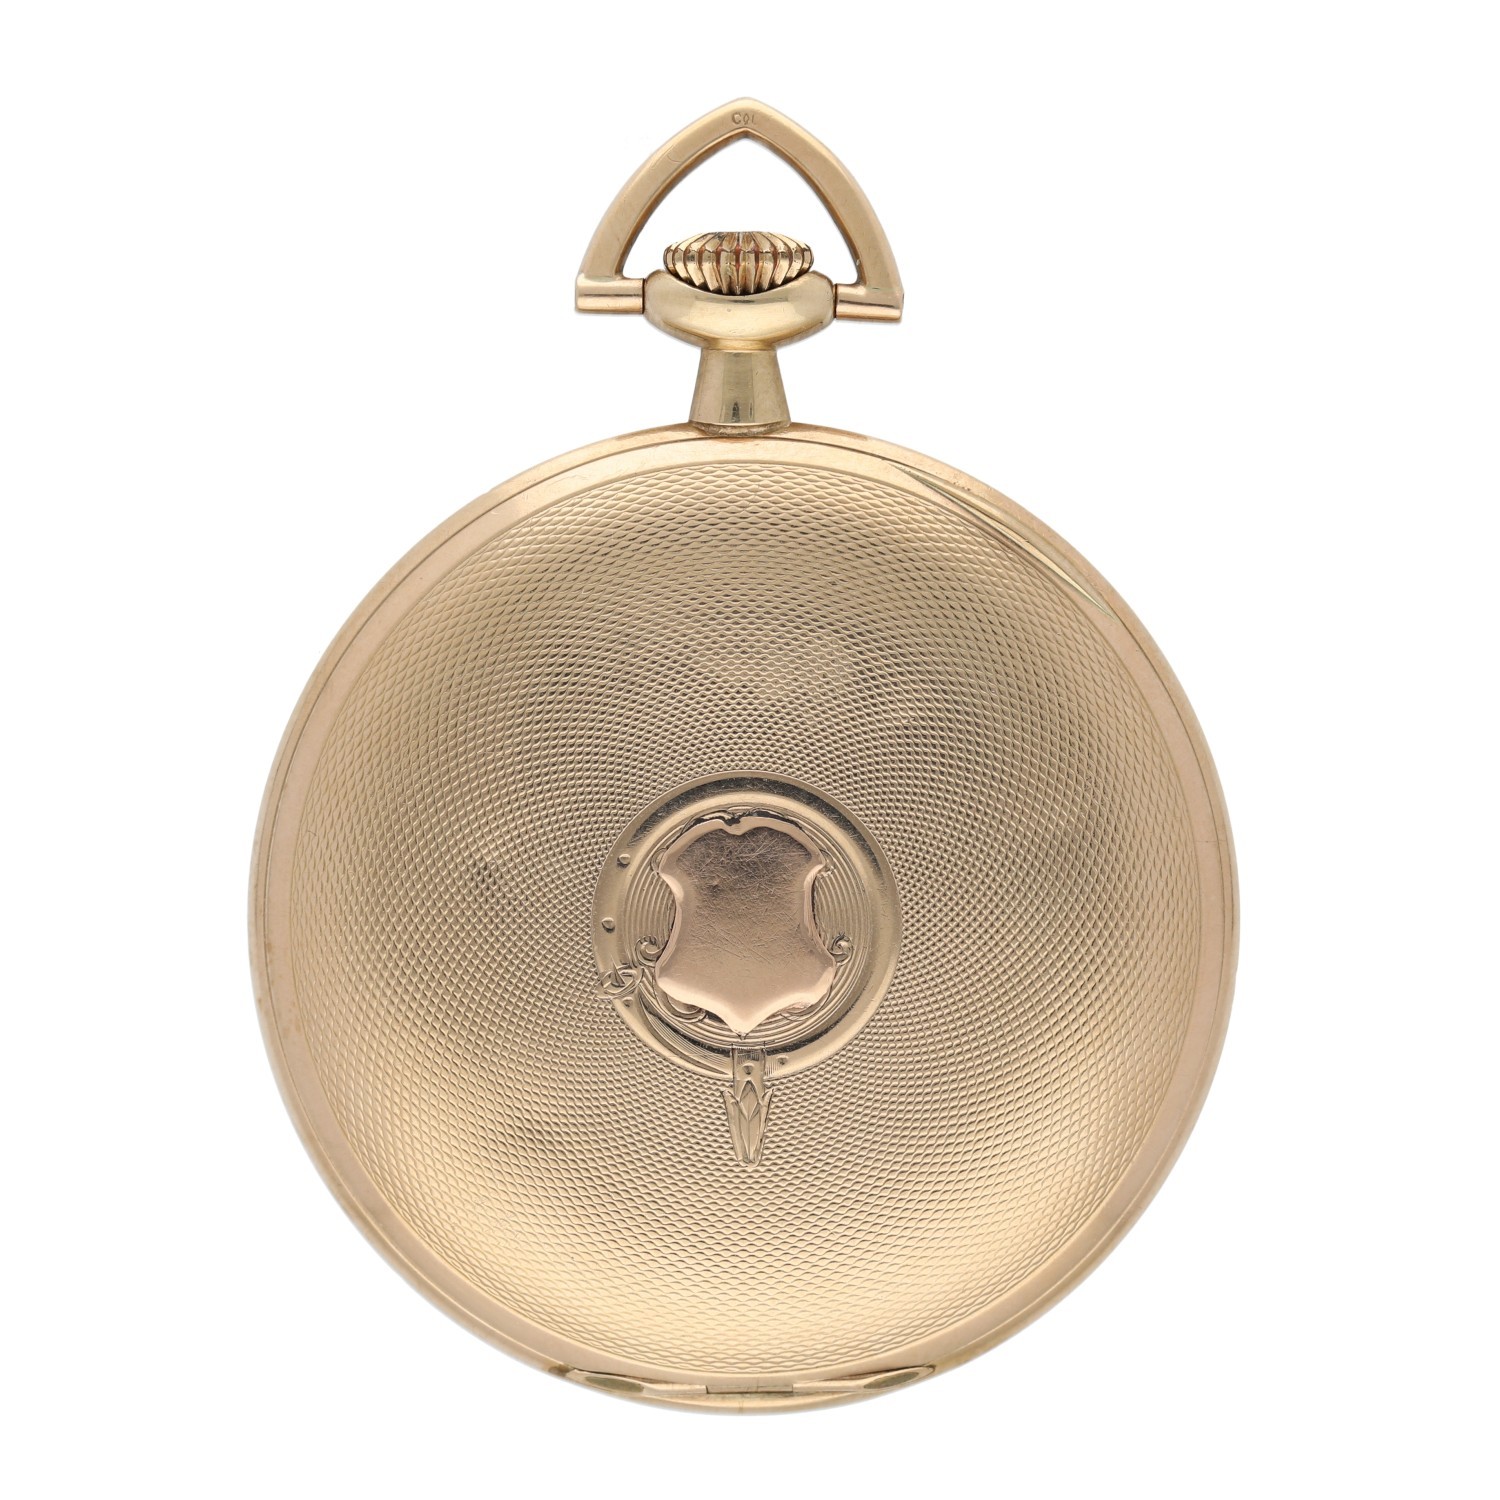 Sapho - Swiss 9ct dress pocket watch, import hallmarks London 1926, signed 15 jewel movement, the - Image 4 of 4